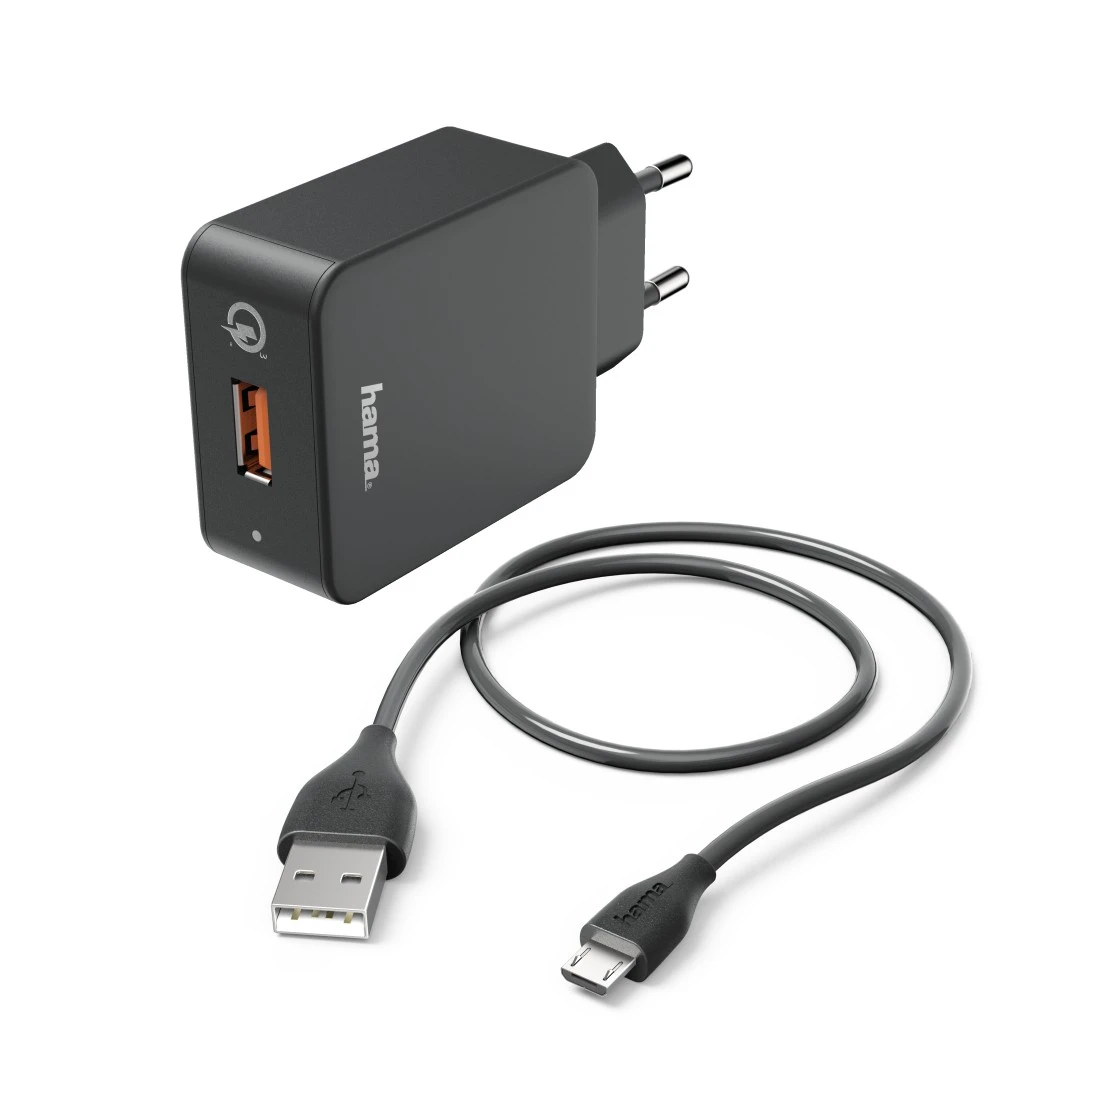 Chargeur de Charge rapide 3.0 USB 5V 3A – Kevajo